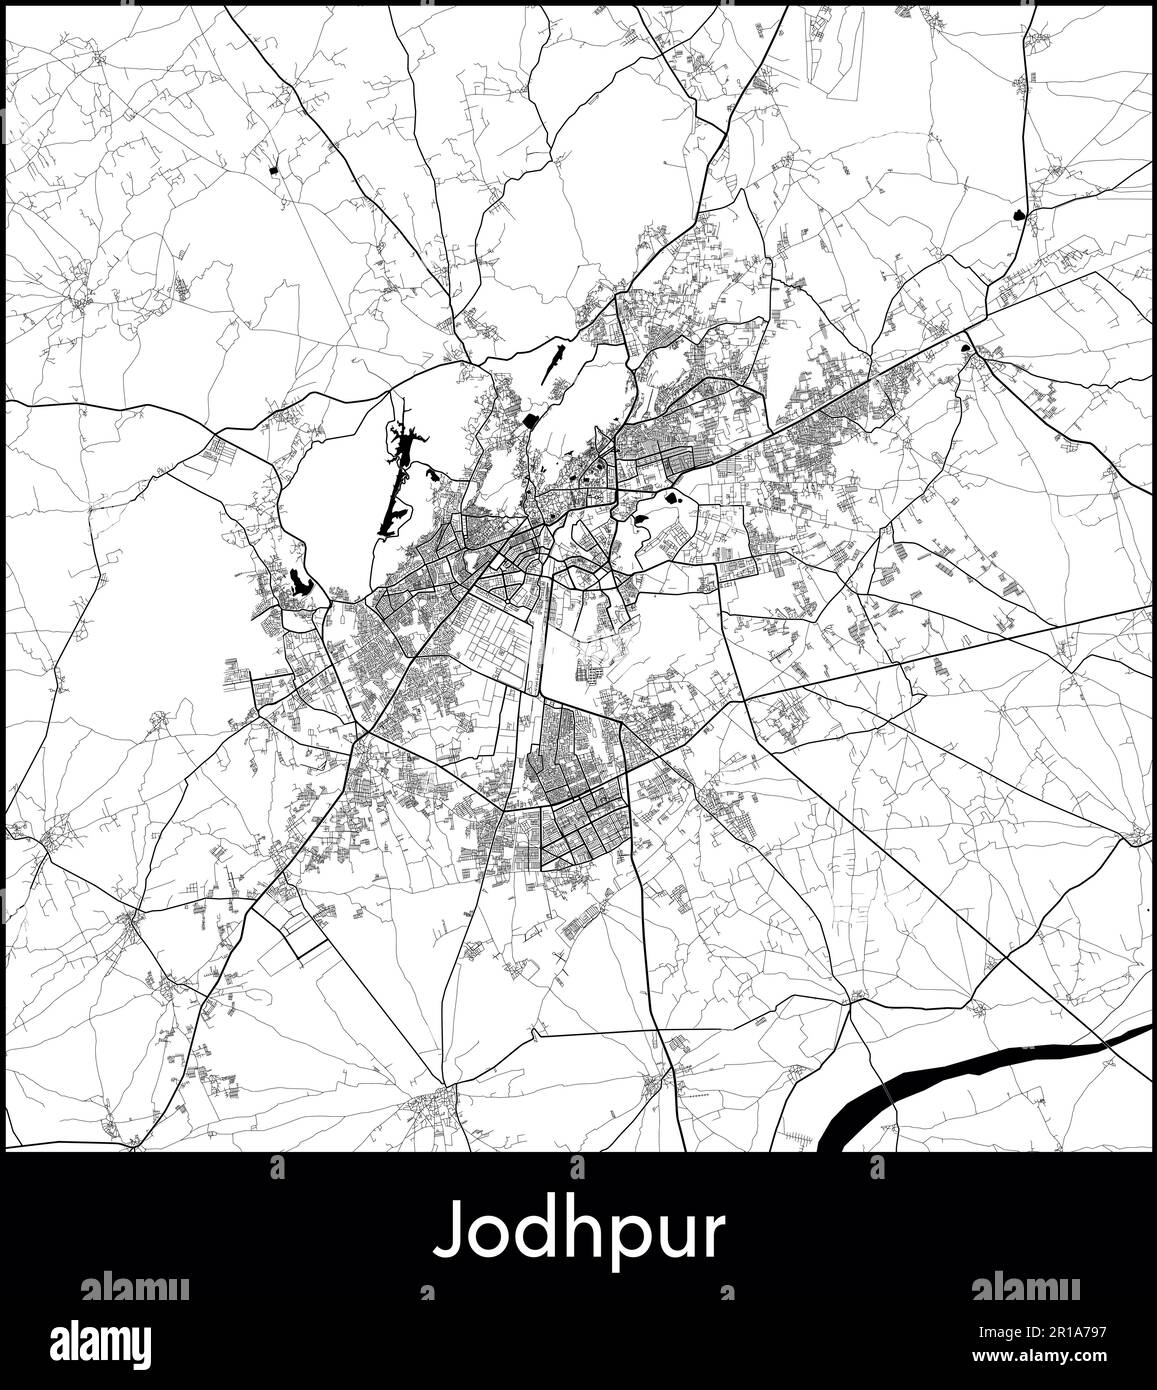 City Map Asia India Jodhpur vector illustration Stock Vector